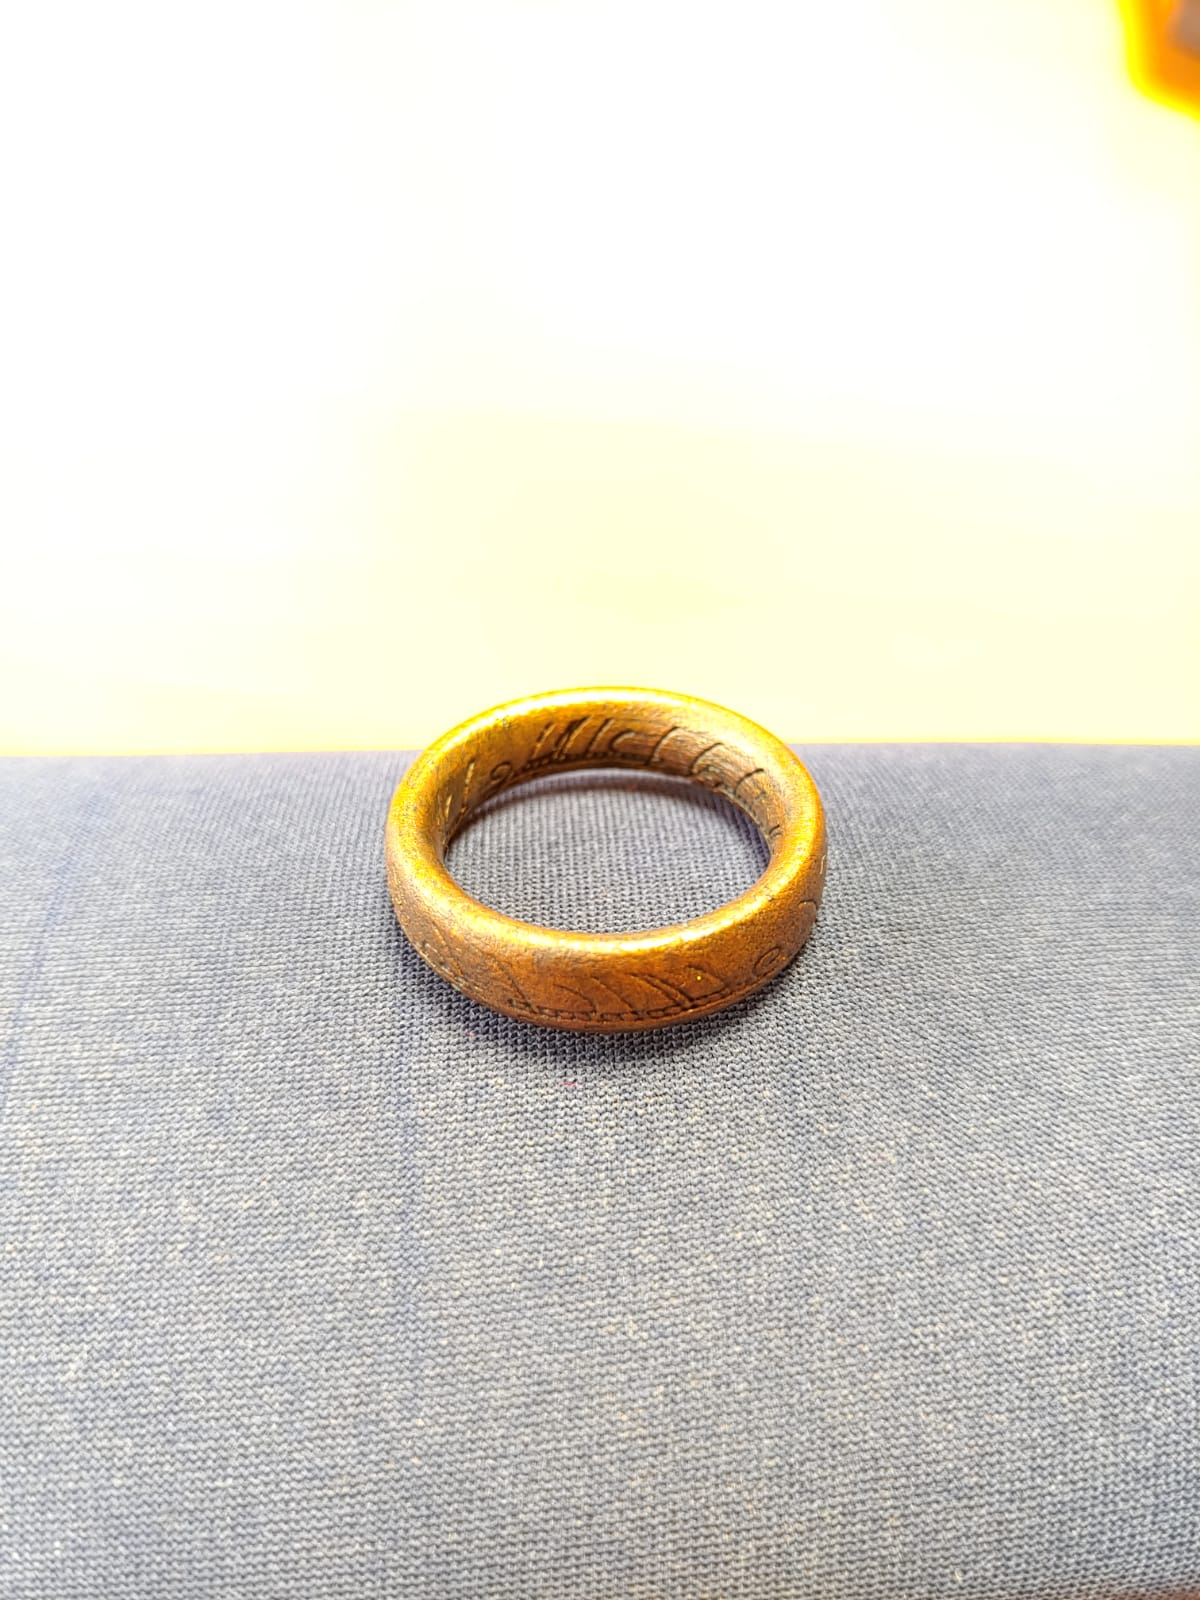 3D Printable The One Ring by Mieszko Lacinski